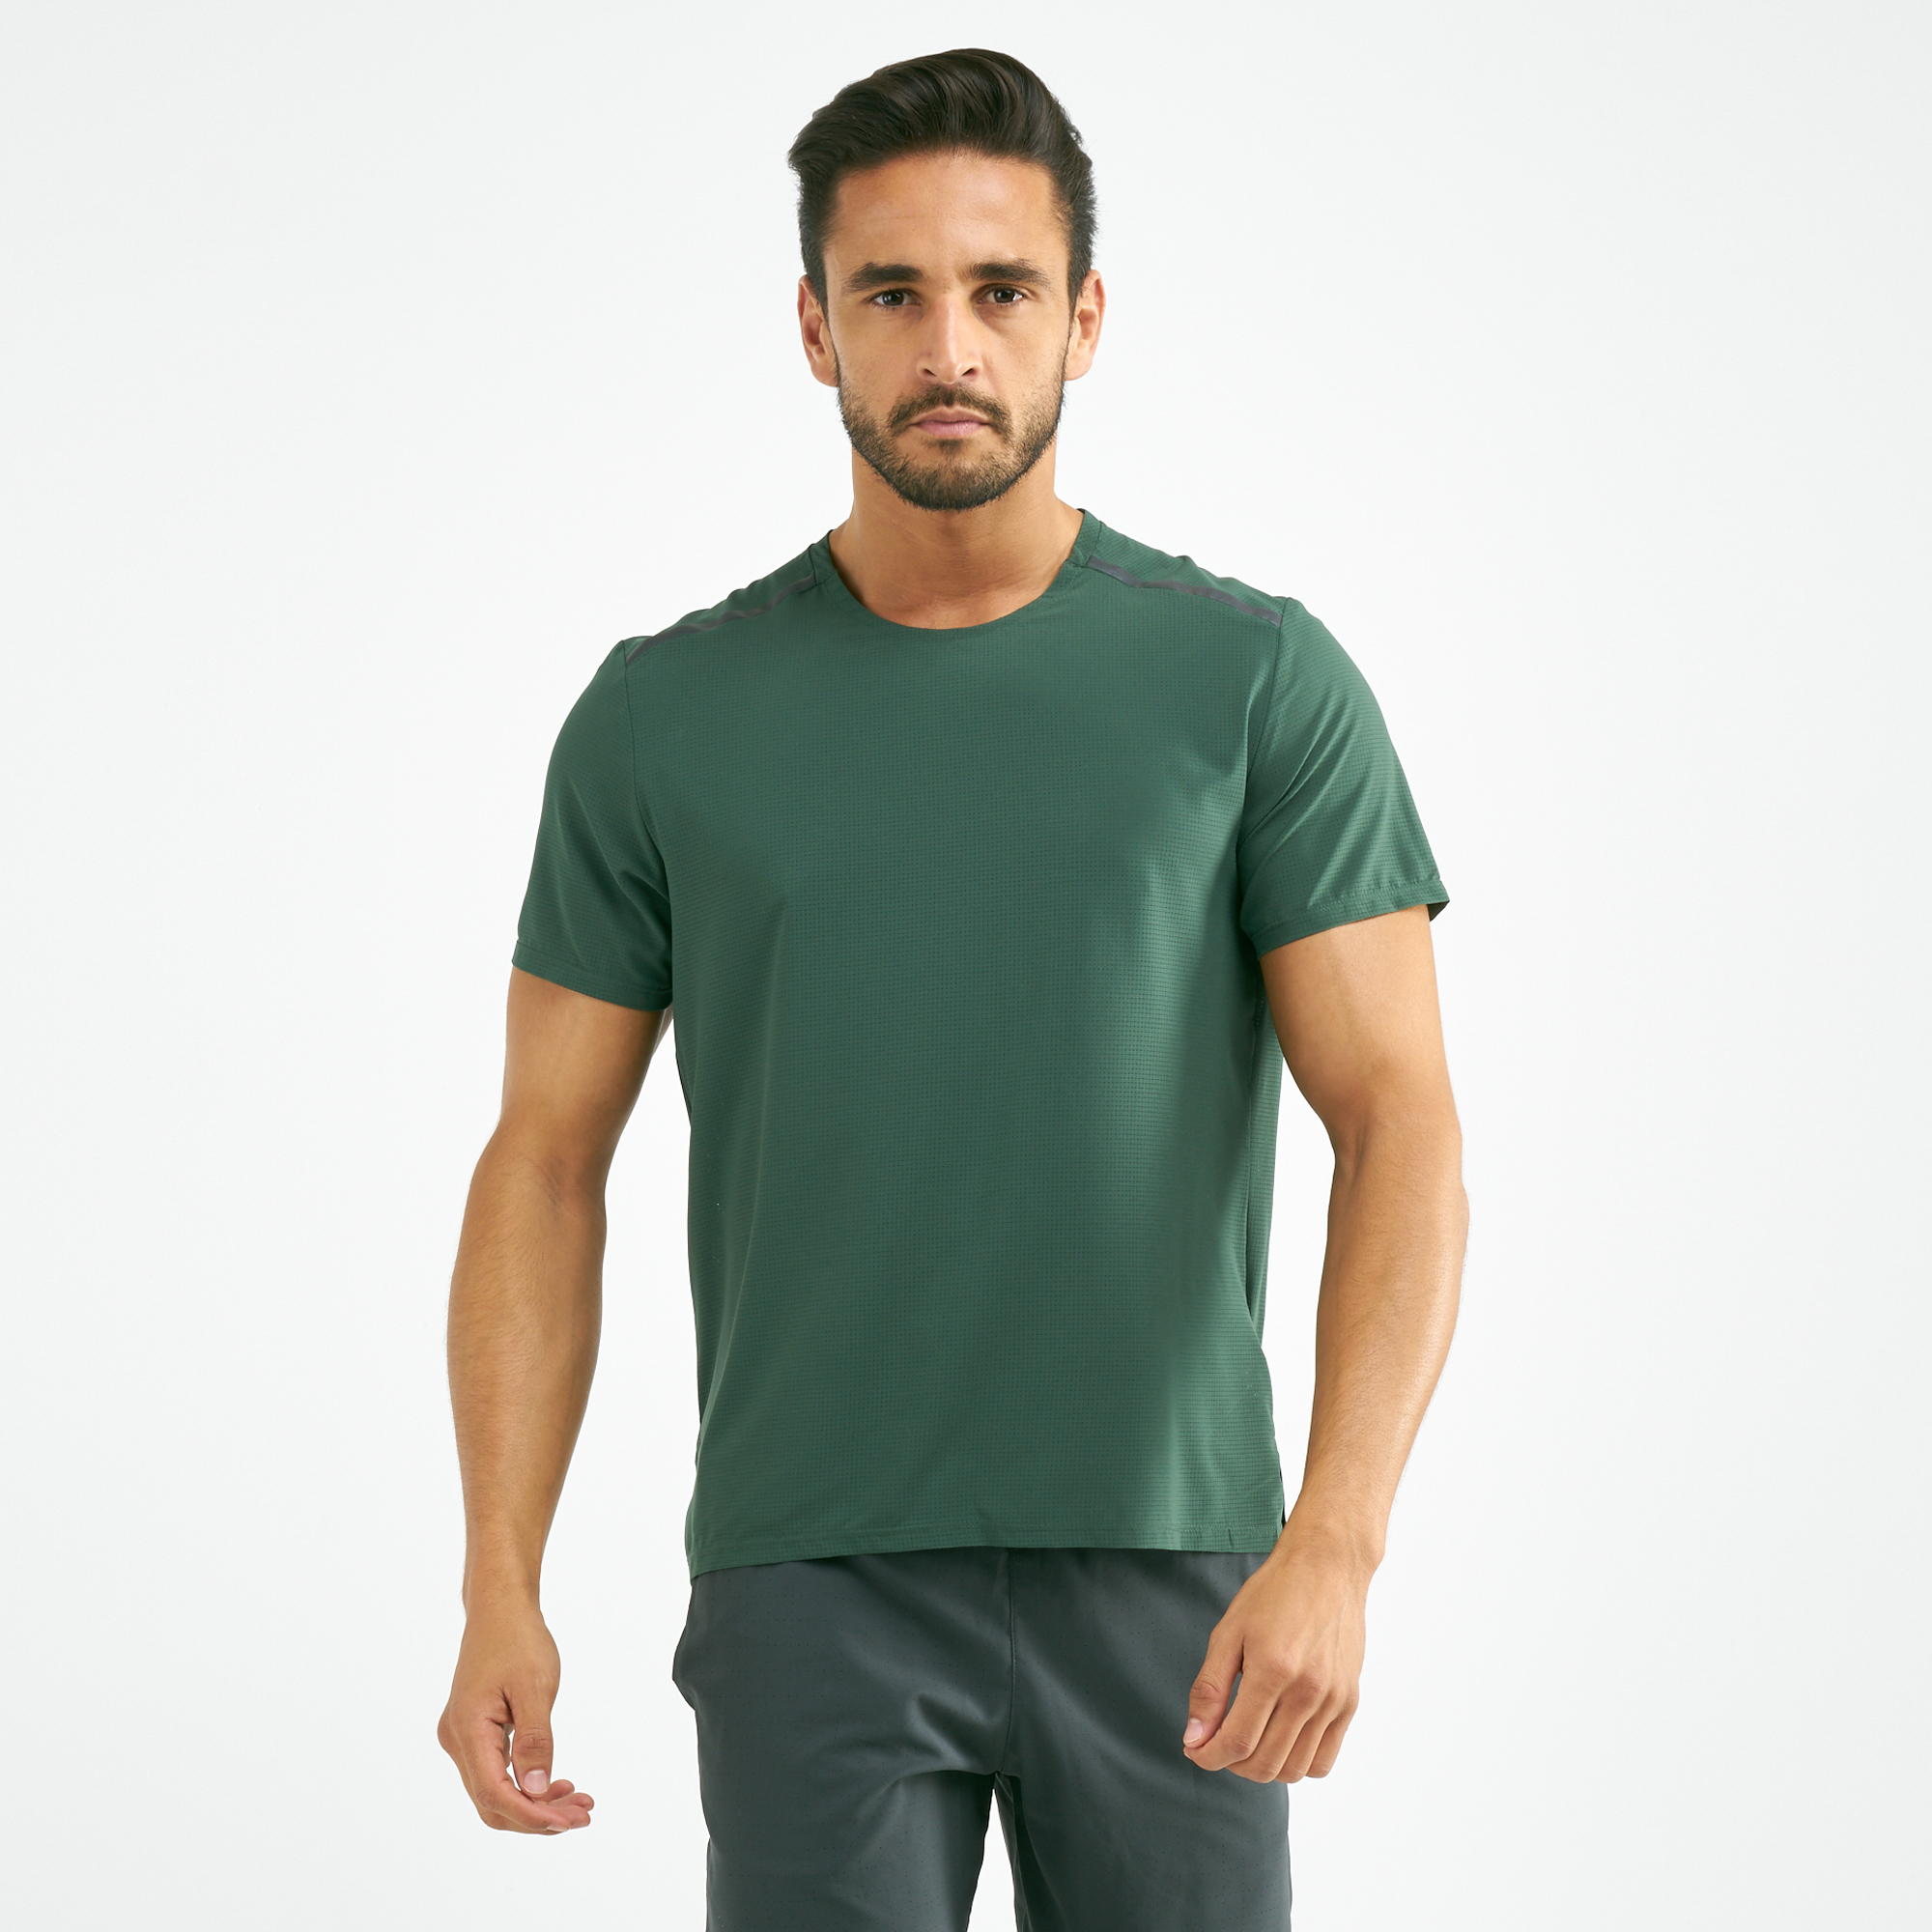 Nike Men's Tech Pack Running T-Shirt | T-Shirts | Tops | Clothing ...